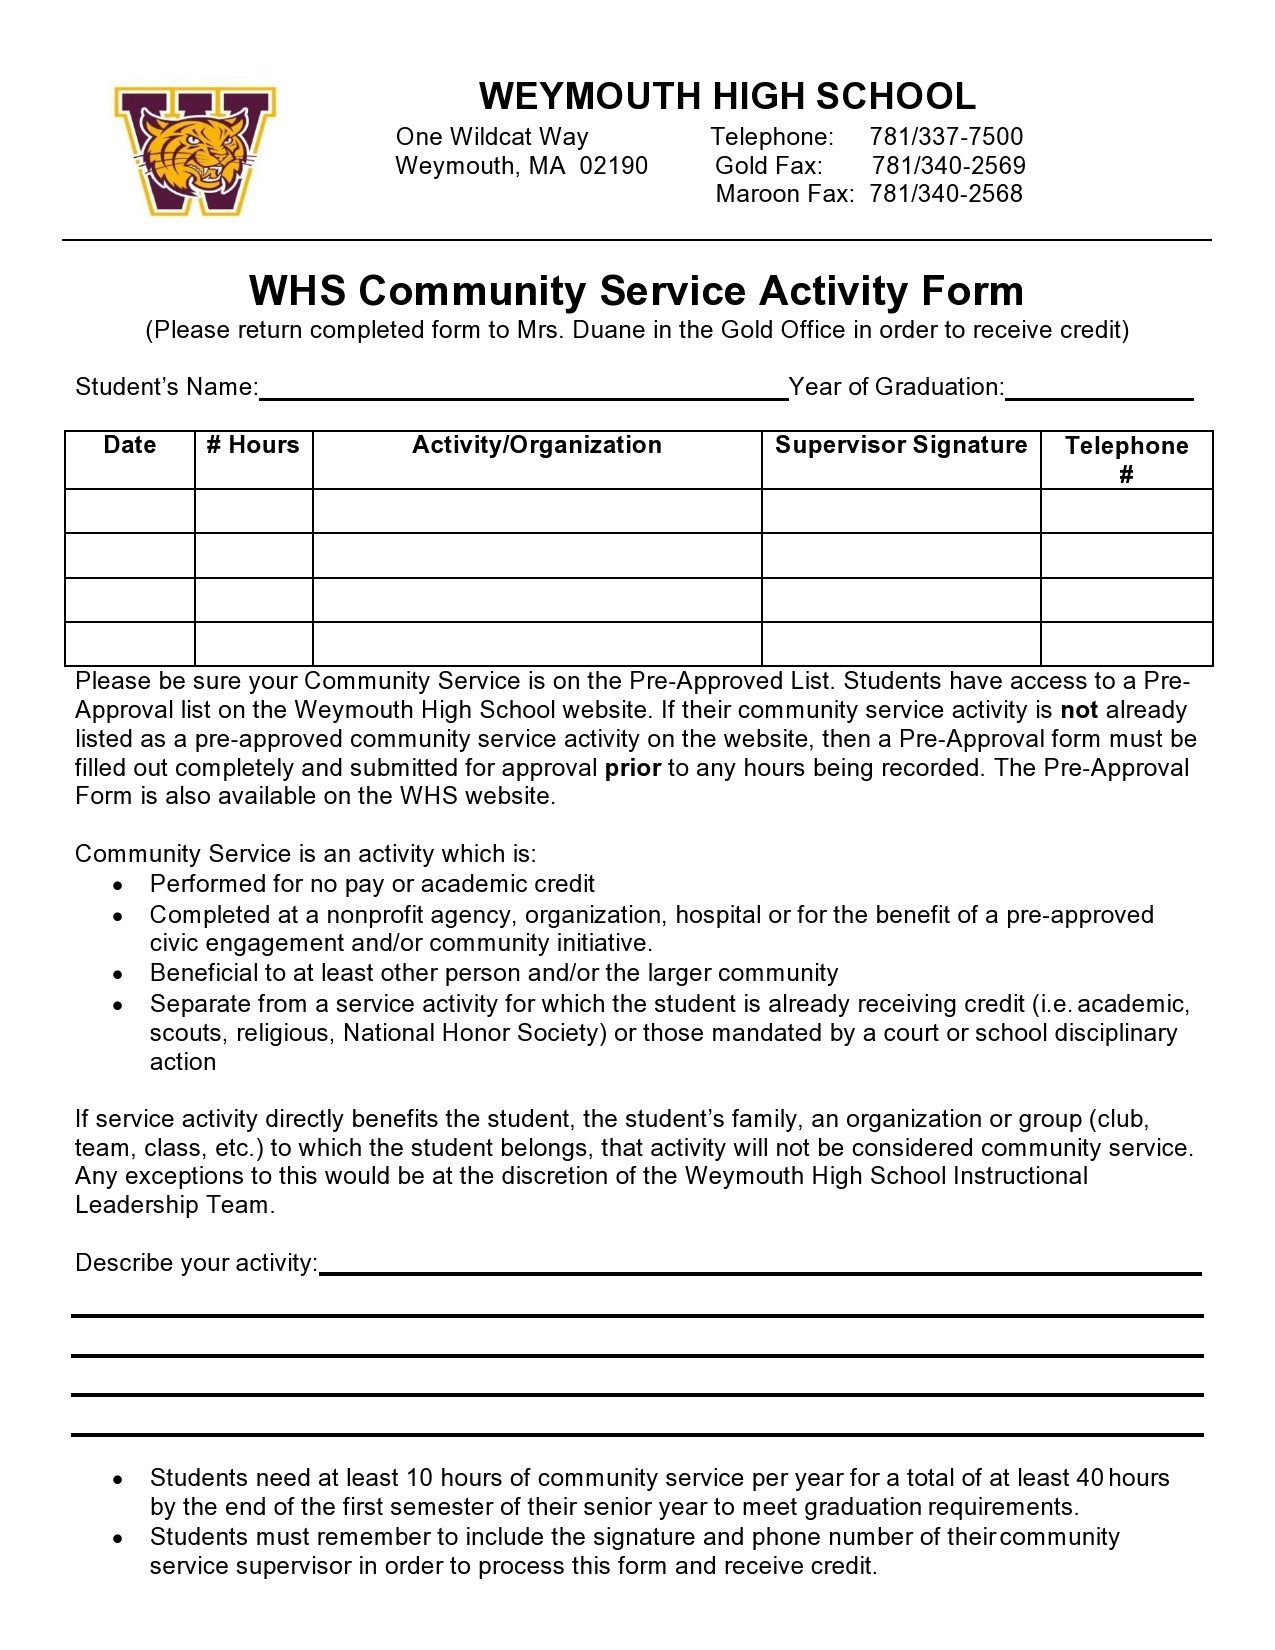 Free community service form 36